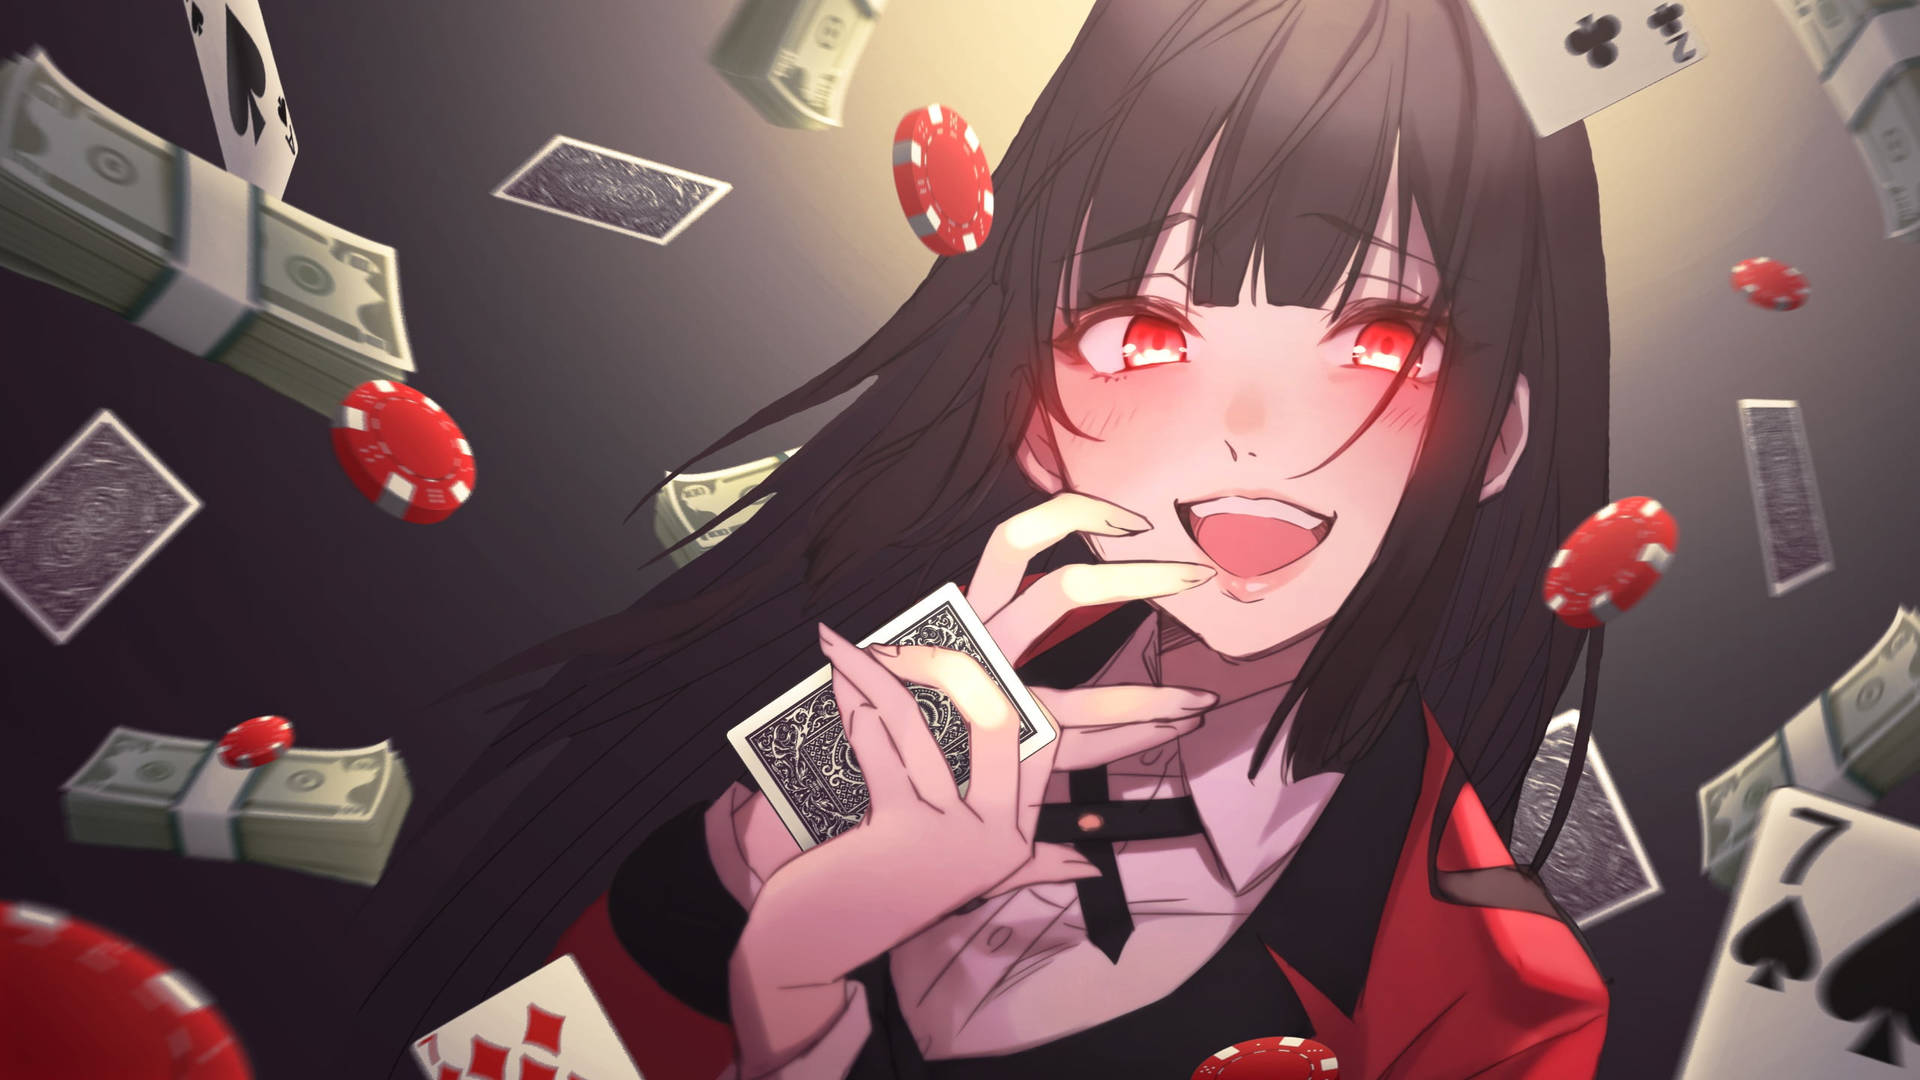 Anime Girl Playing Cards